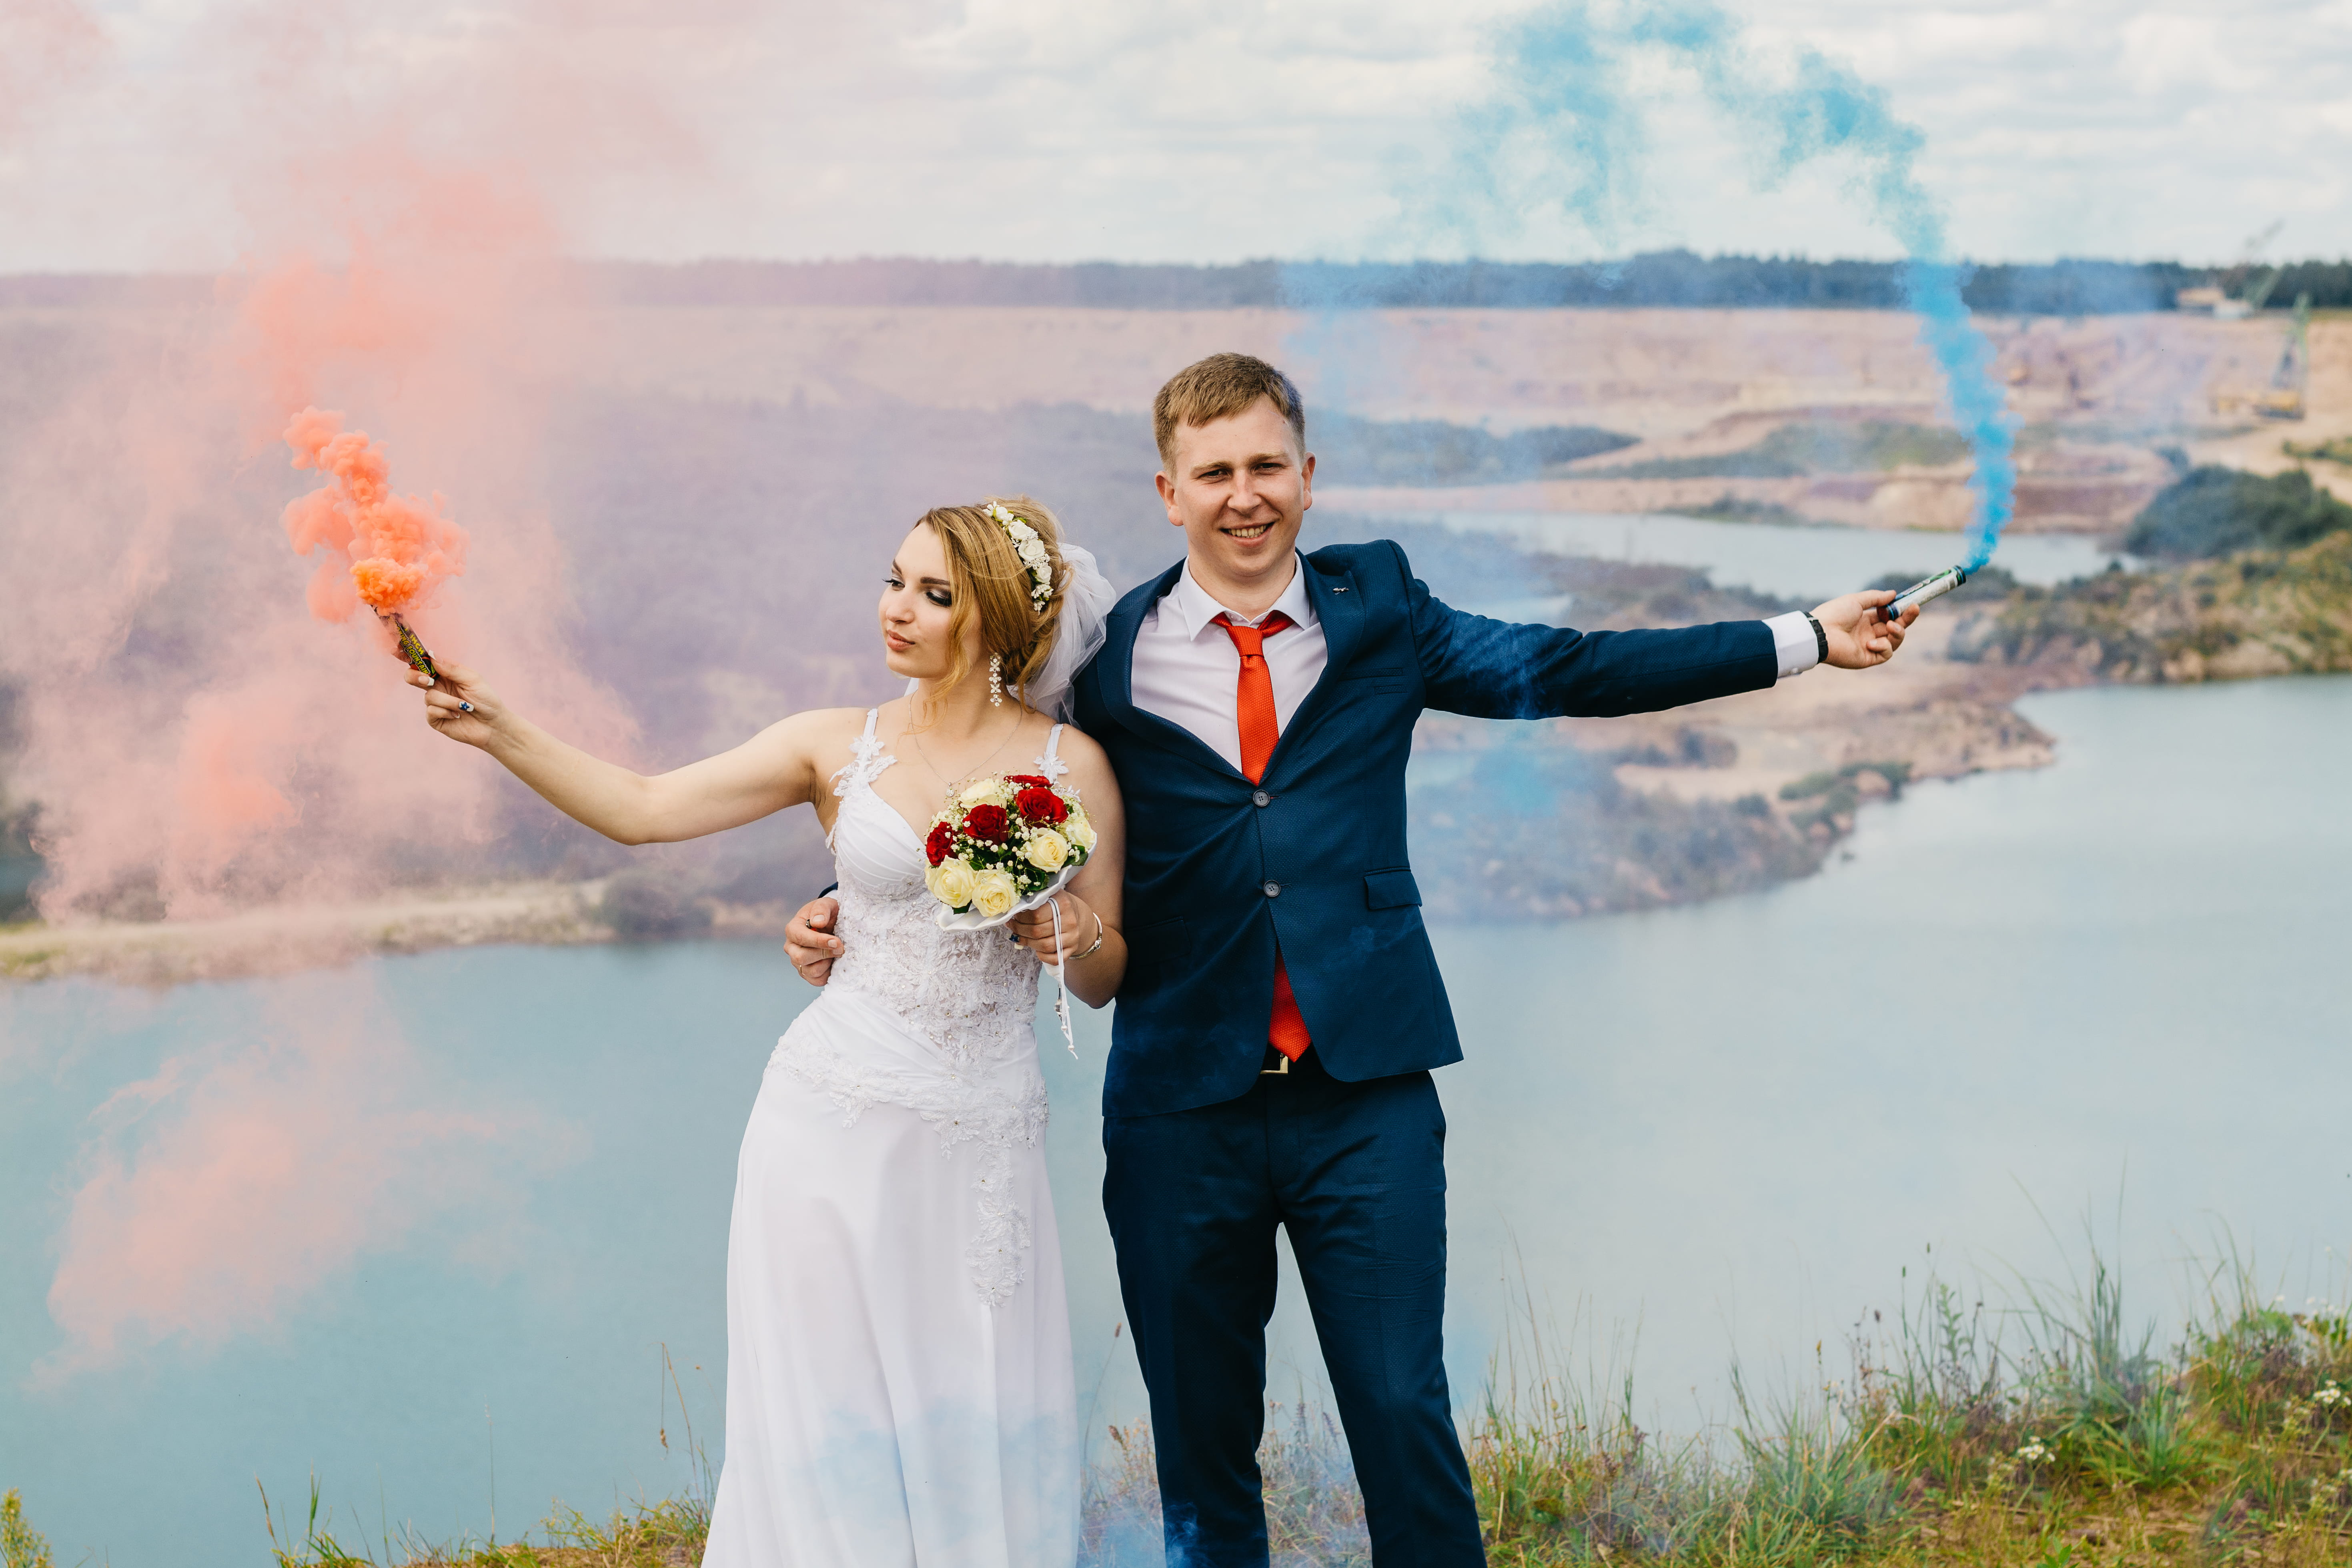 Bride And Groom Holding Smoke Bombs Near Body Of Water, beautiful